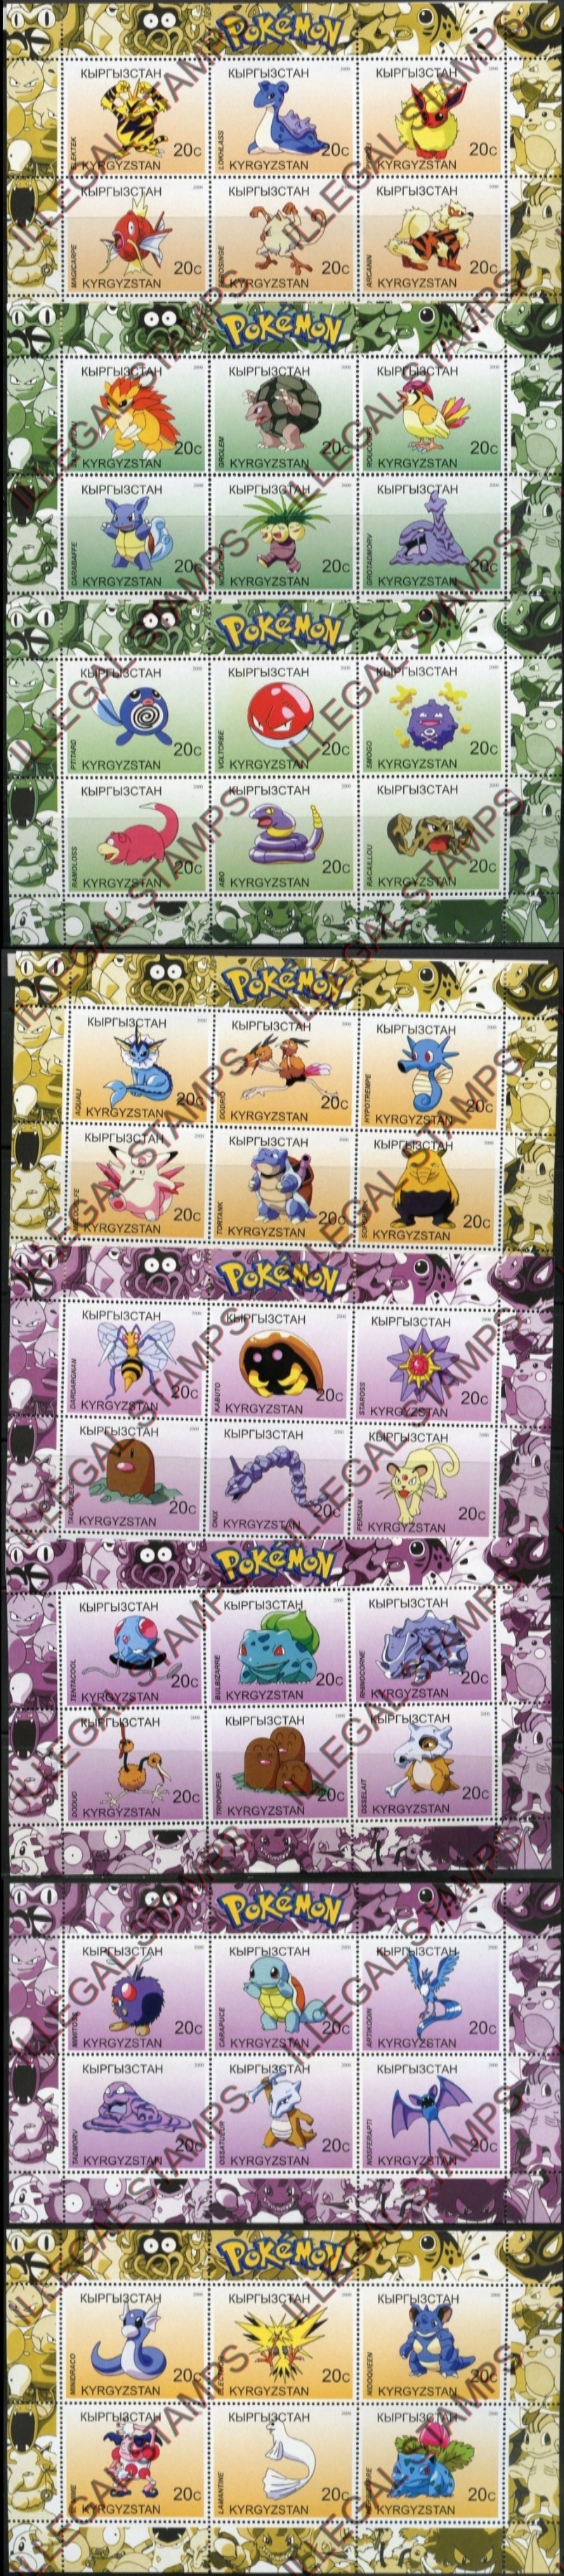 Kyrgyzstan 2000 Pokemon Illegal Stamp Sheetlets of Six